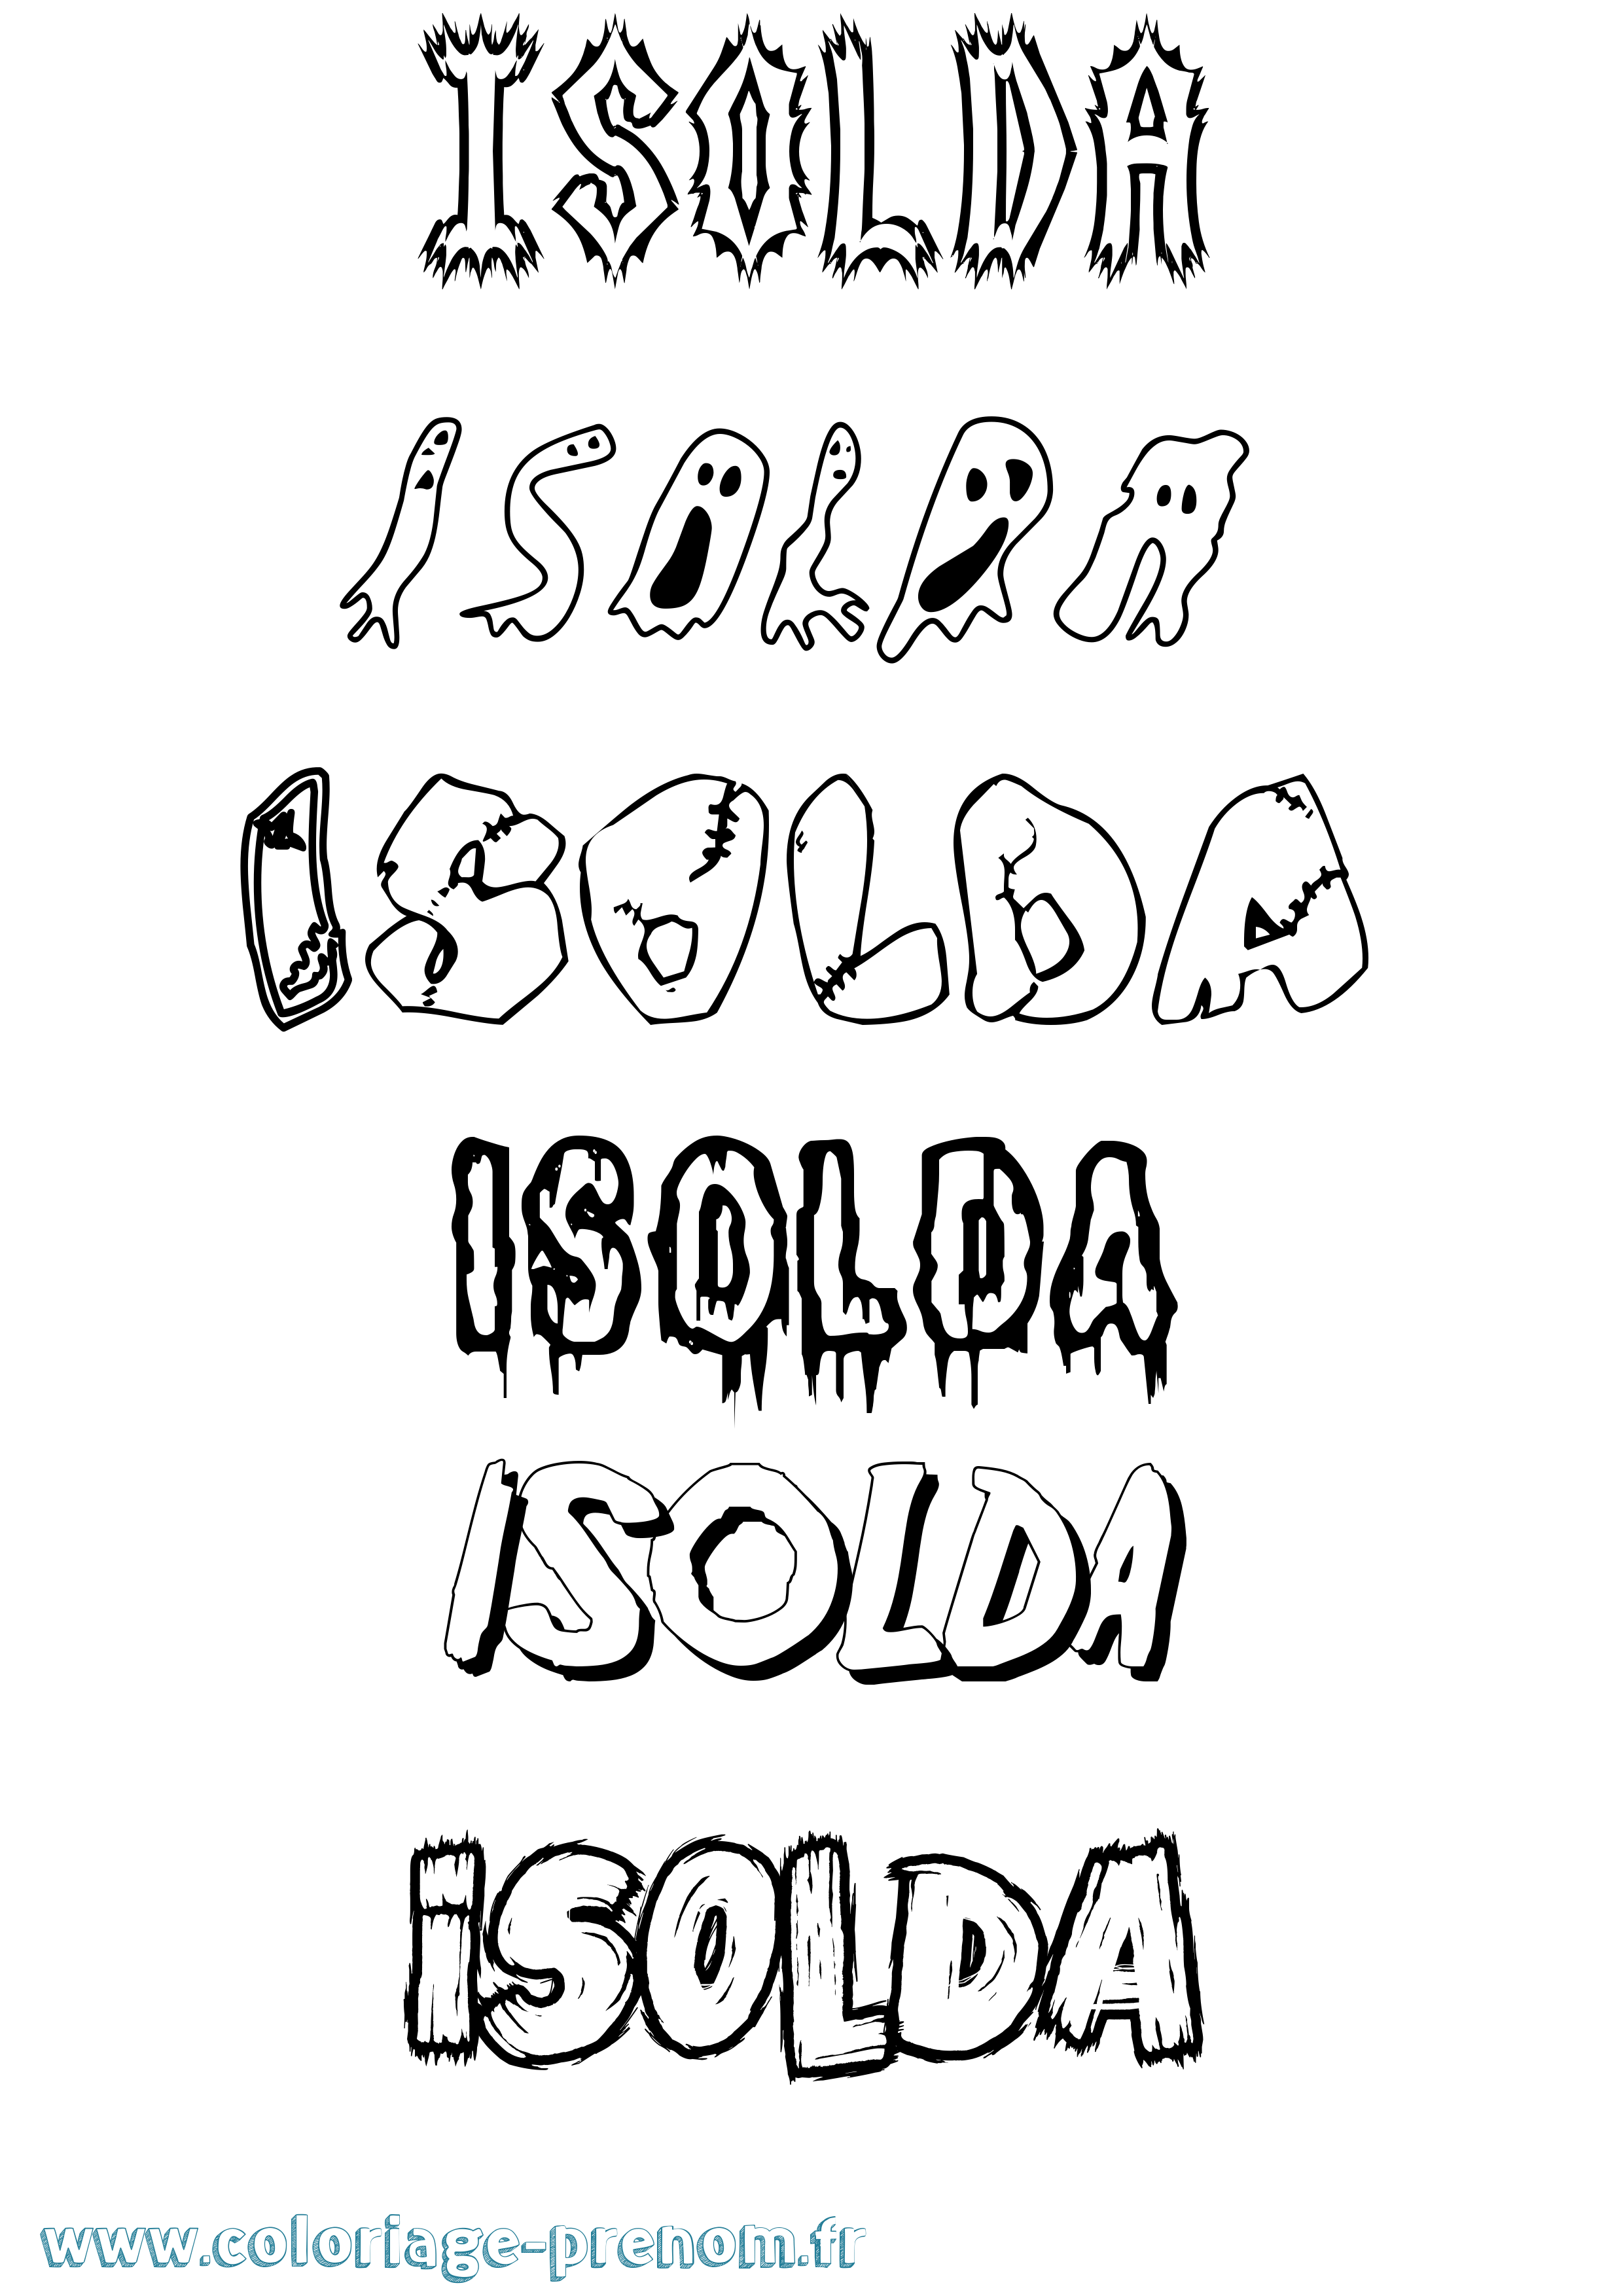 Coloriage prénom Isolda Frisson